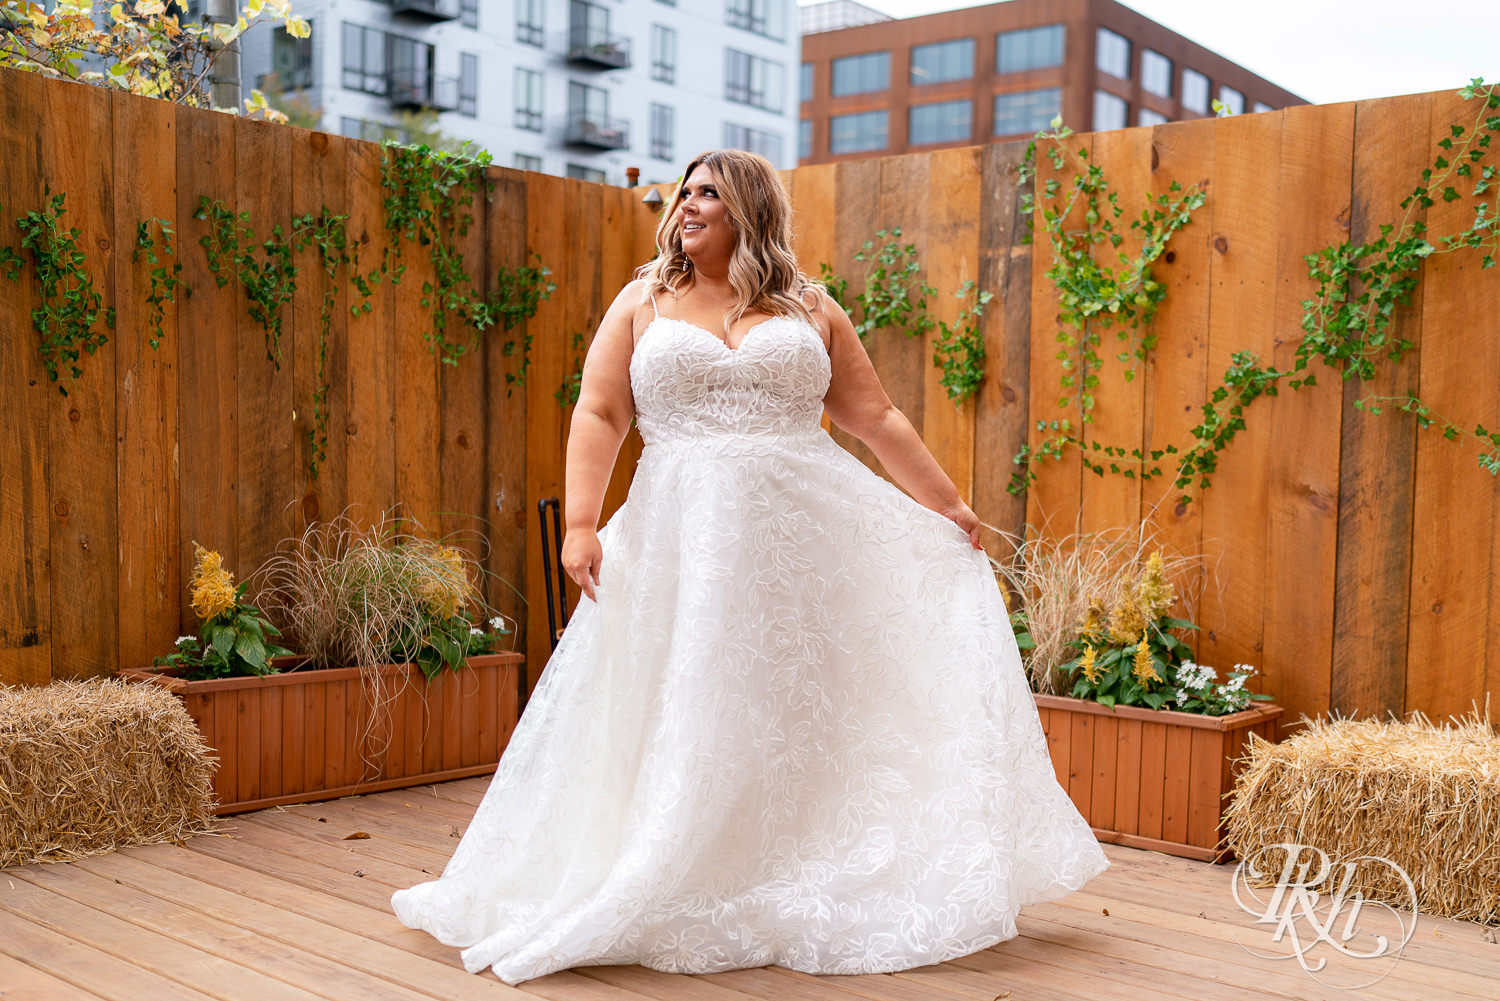 Plus size bride dancing in lacy wedding dress in Minneapolis, Minnesota.